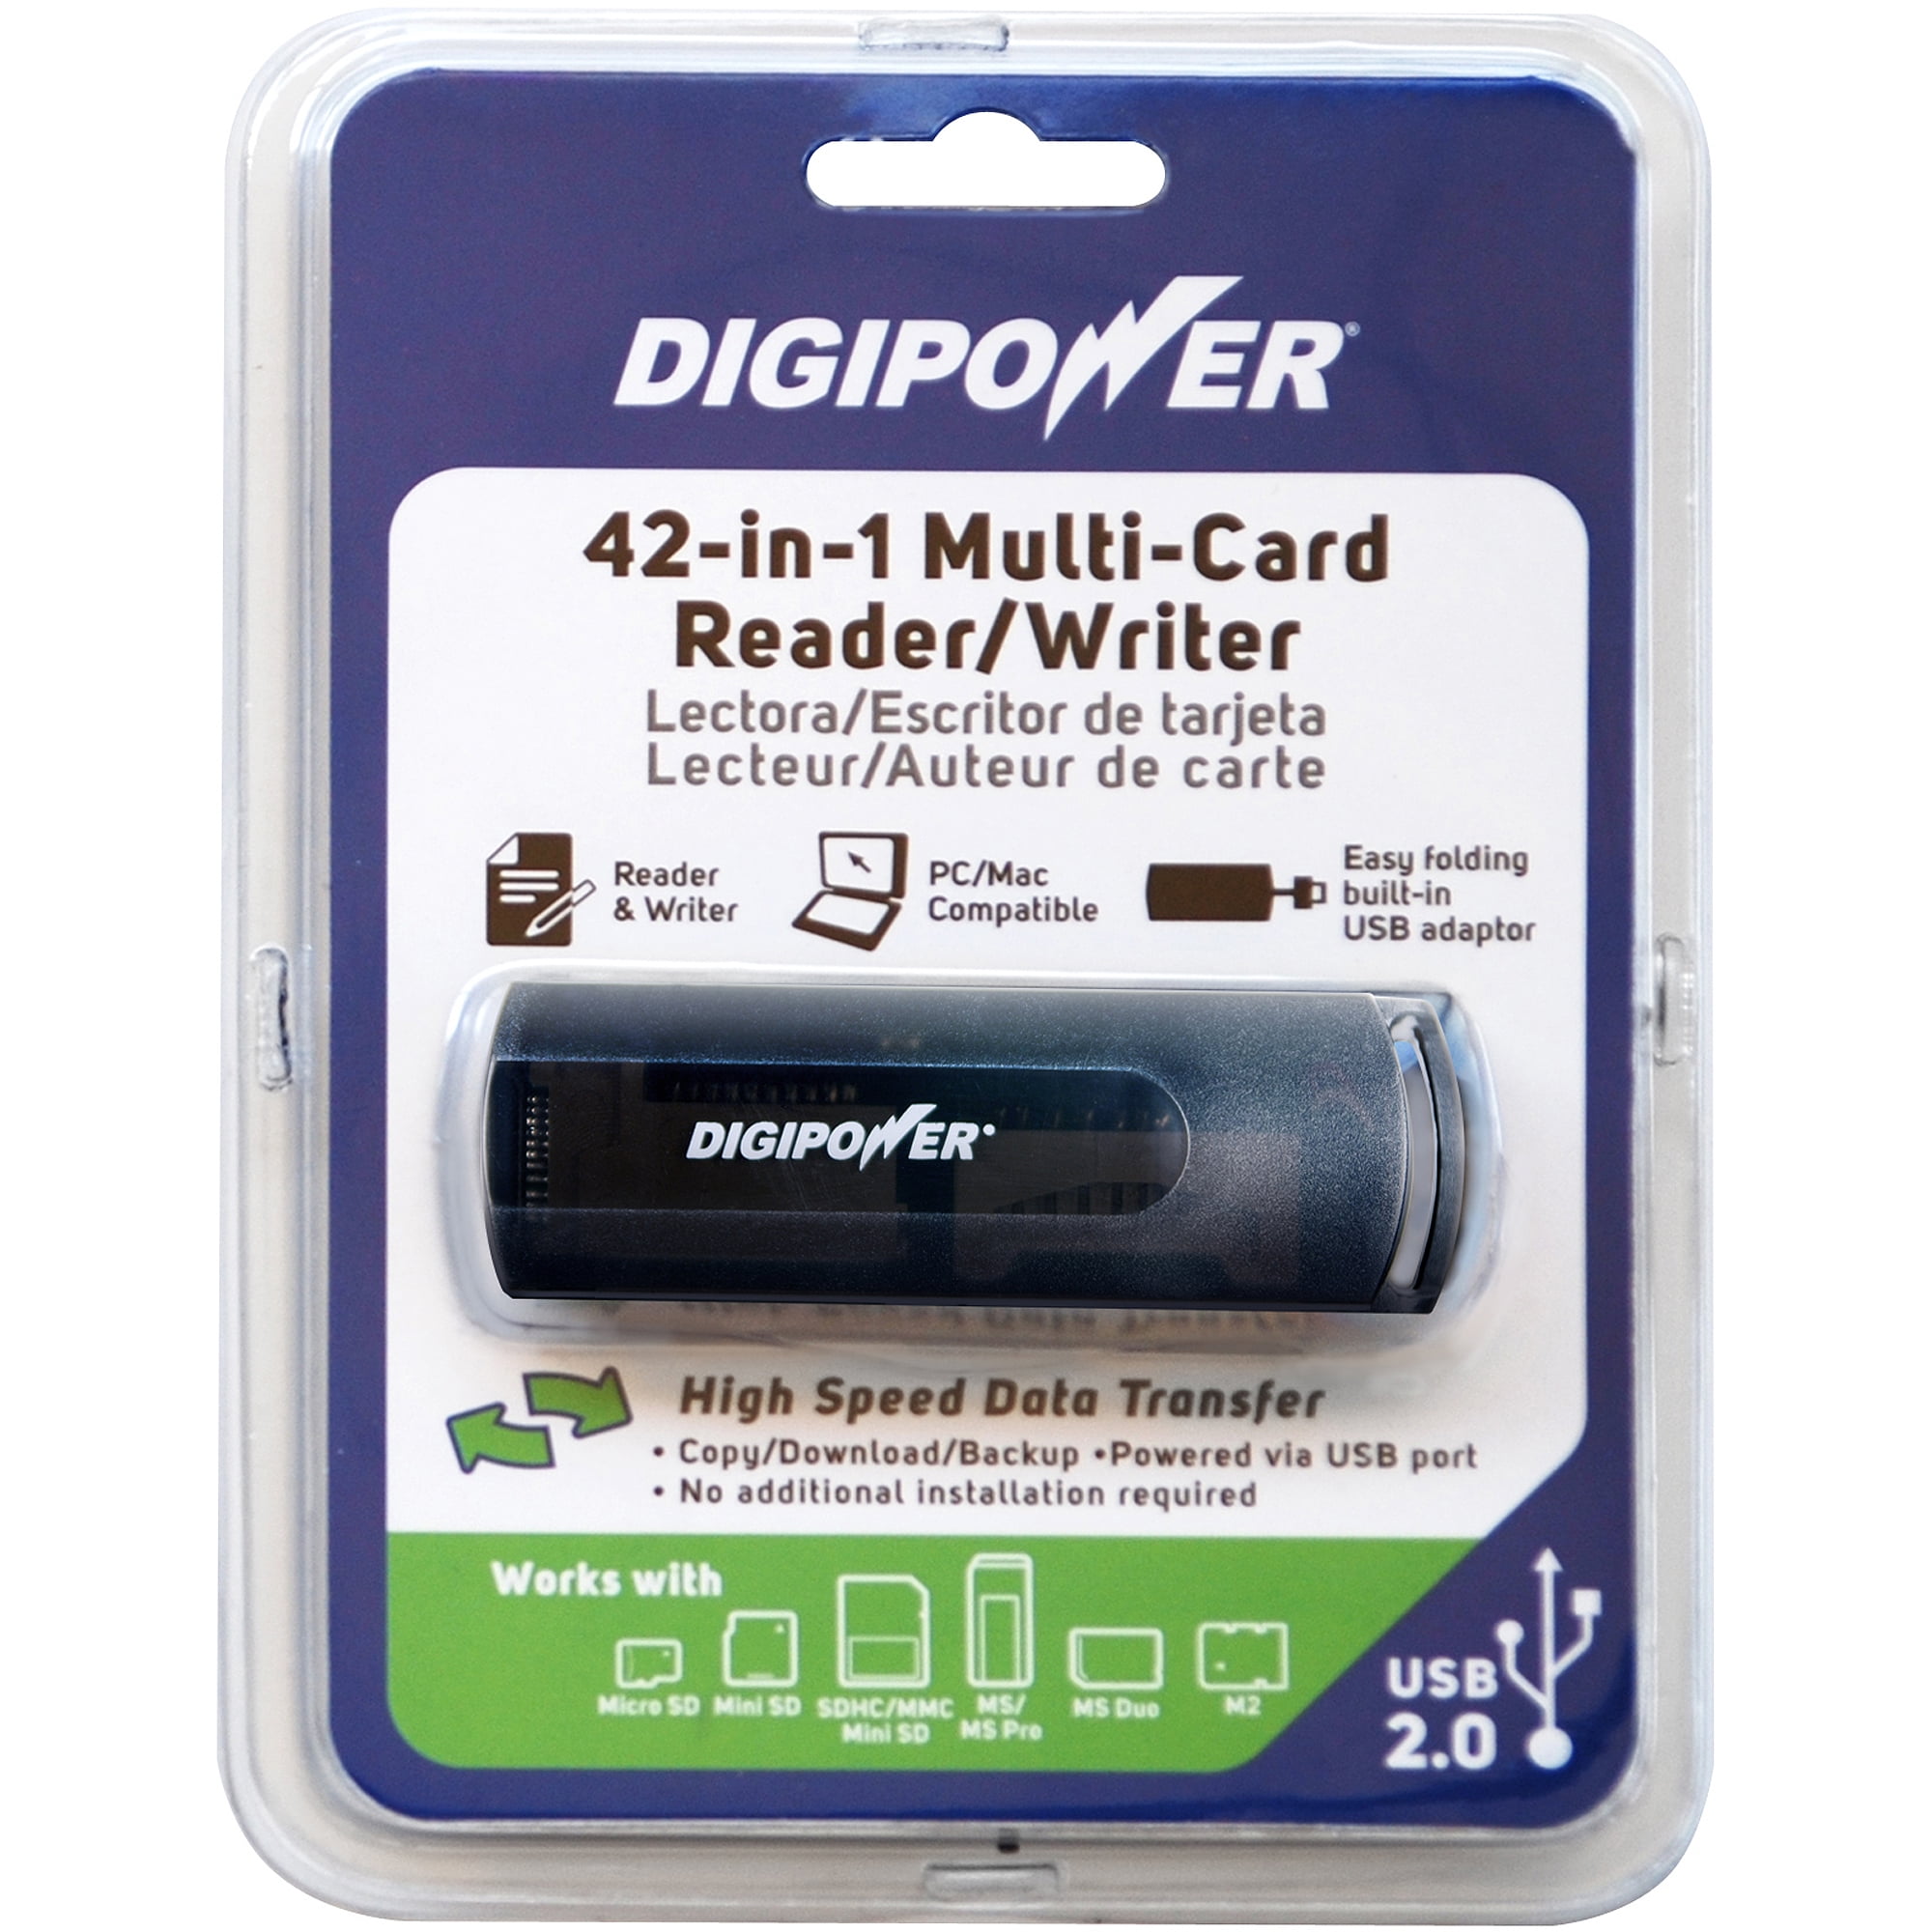 Realtek USB 2.0 Card Reader. Digipower RPM 1522.